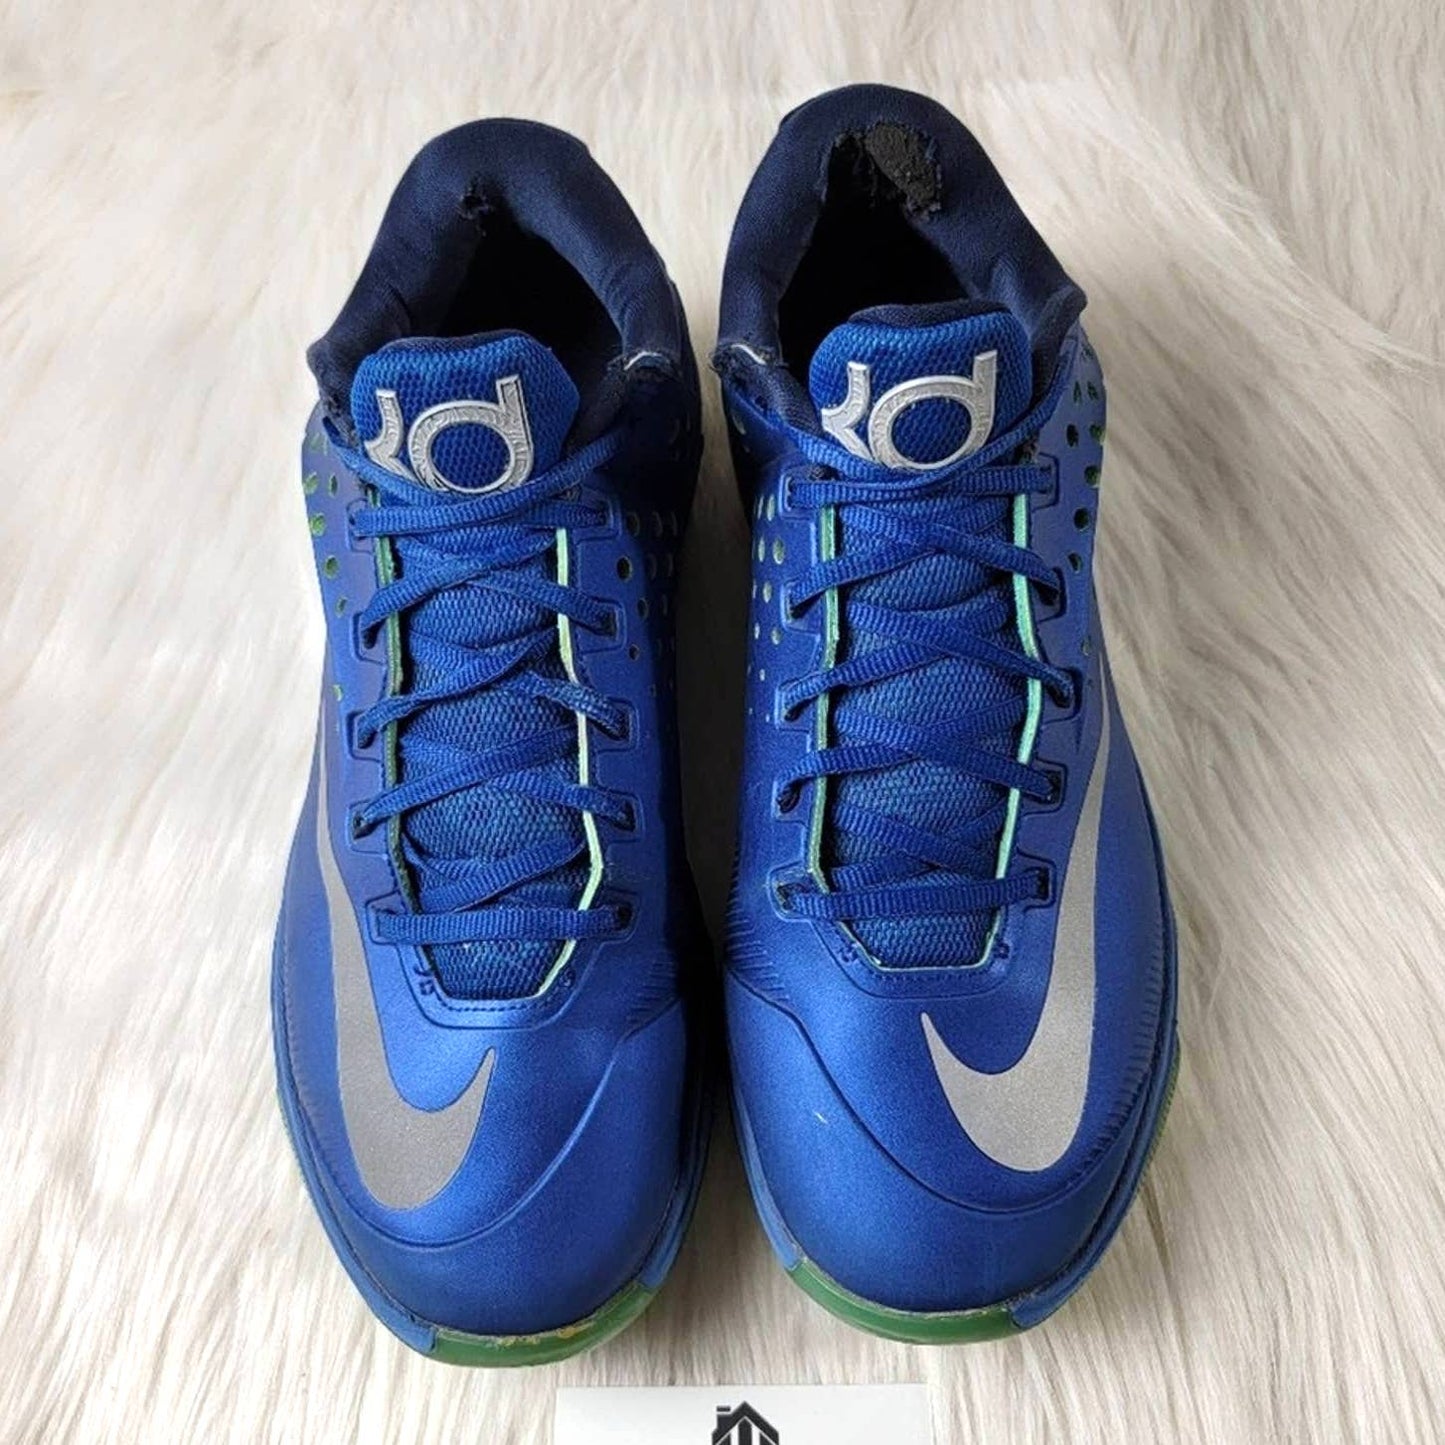 Nike KD 7 Elite 'Elevate' Basketball Shoes - 10.5